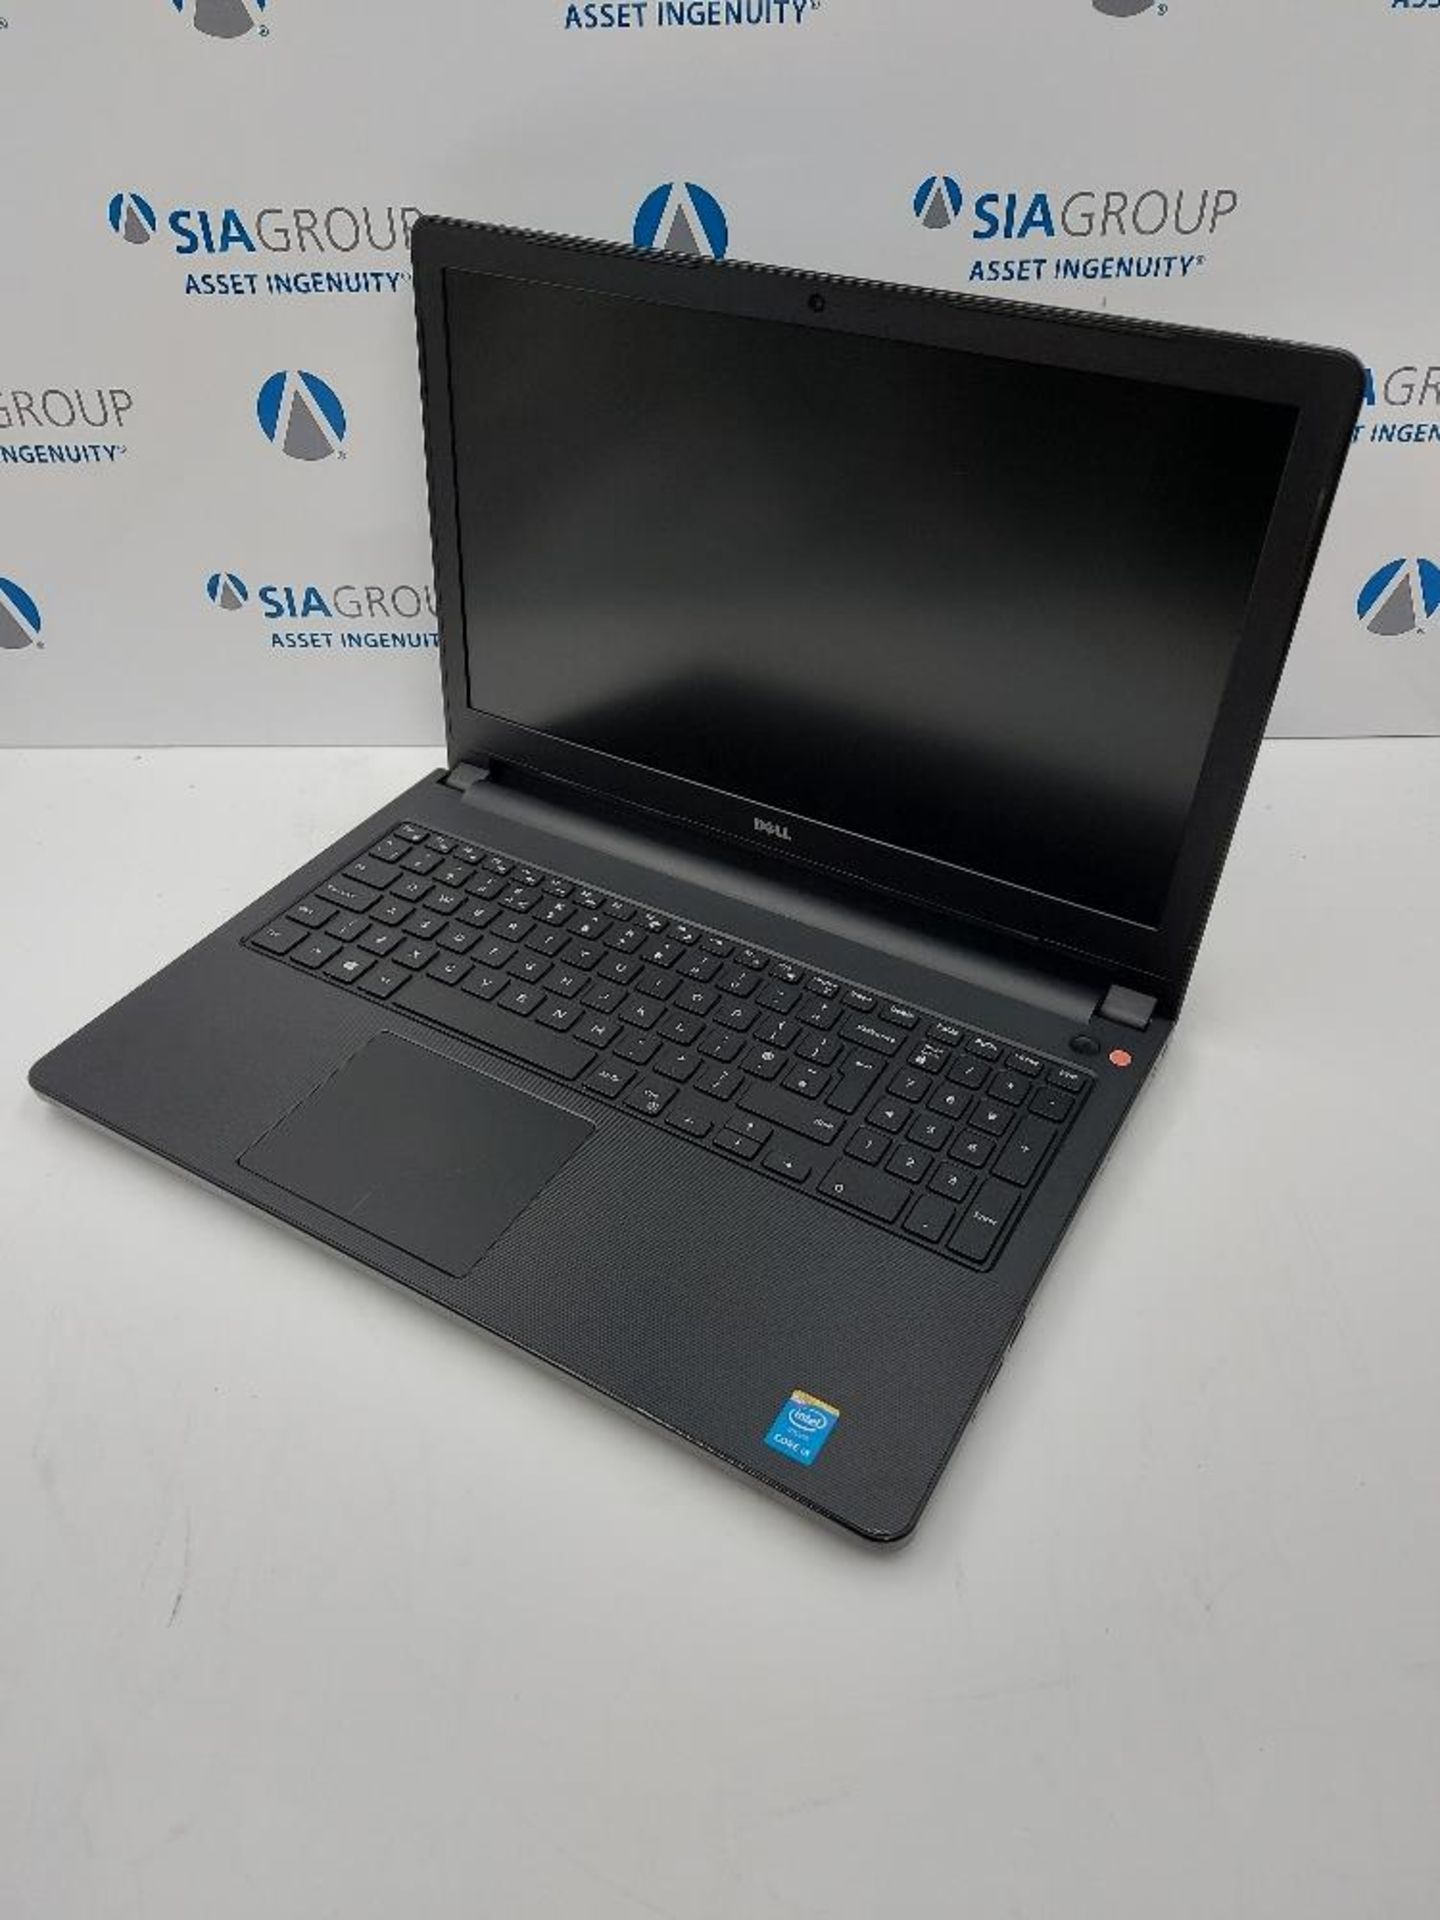 Dell Vostro Windows 7 Laptop with Peli Case - Image 2 of 7